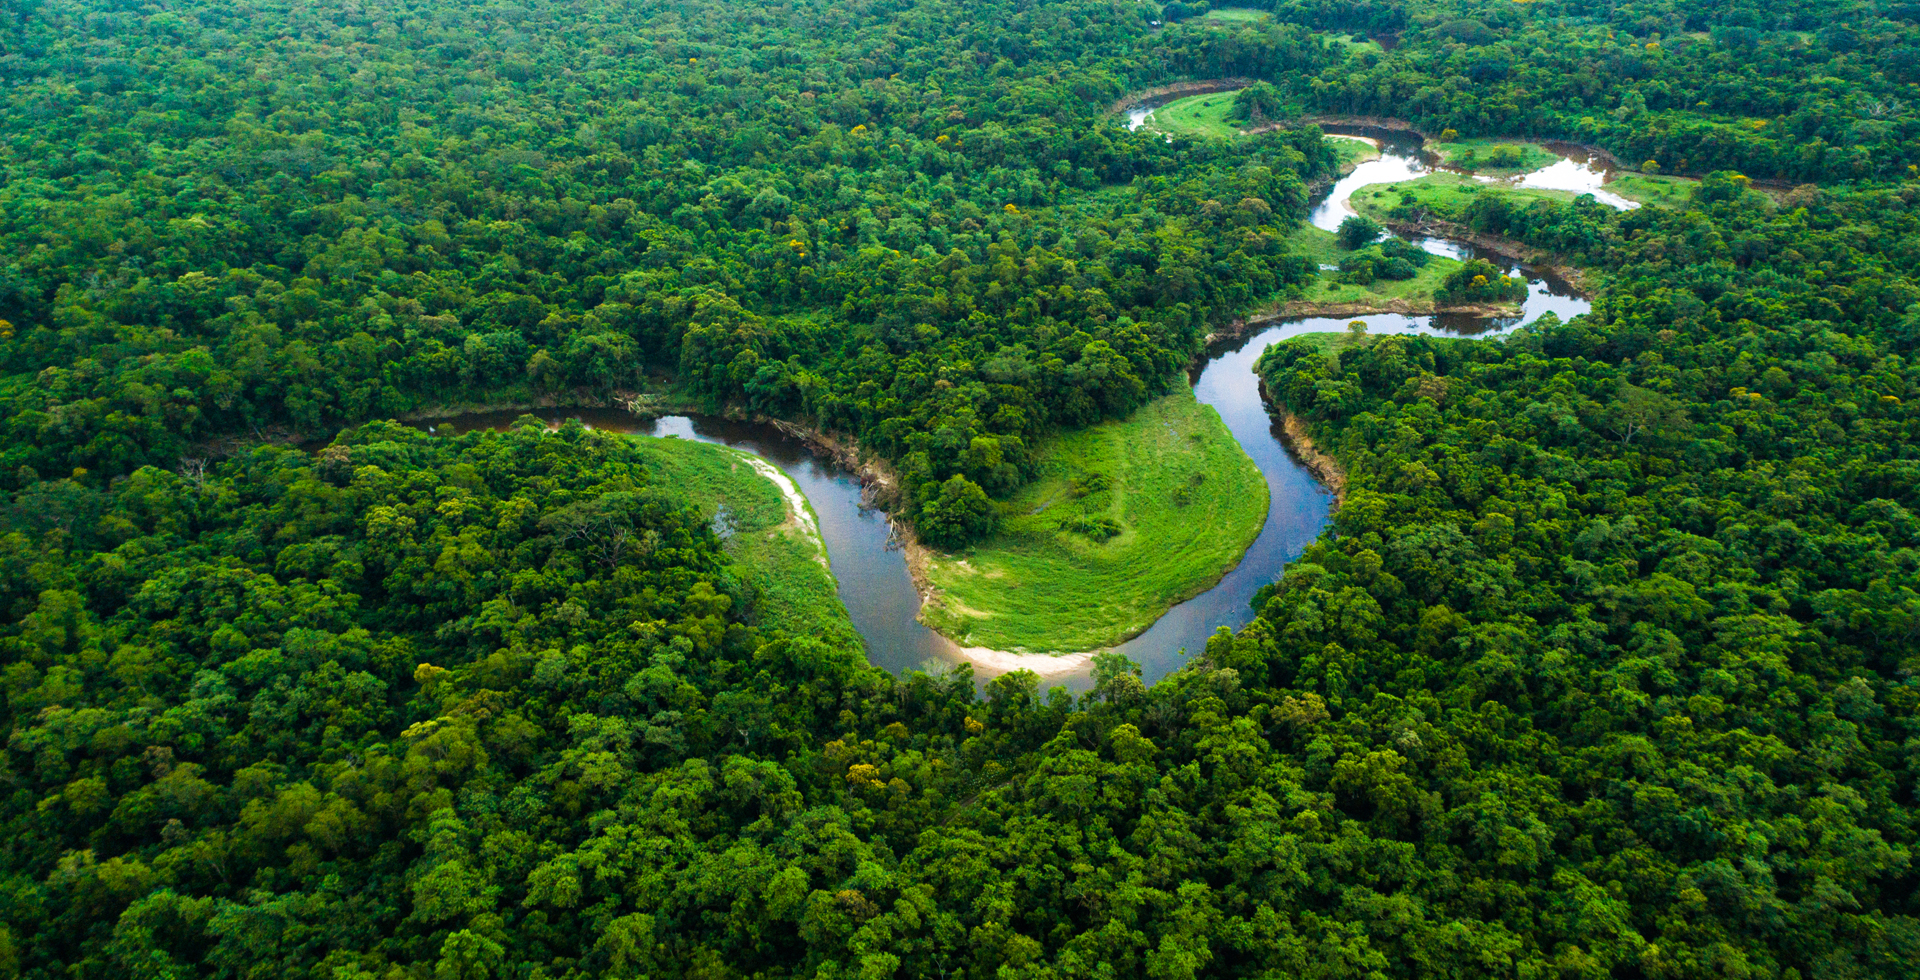 Meandering Itapanhau River in the rainforest - Brazil